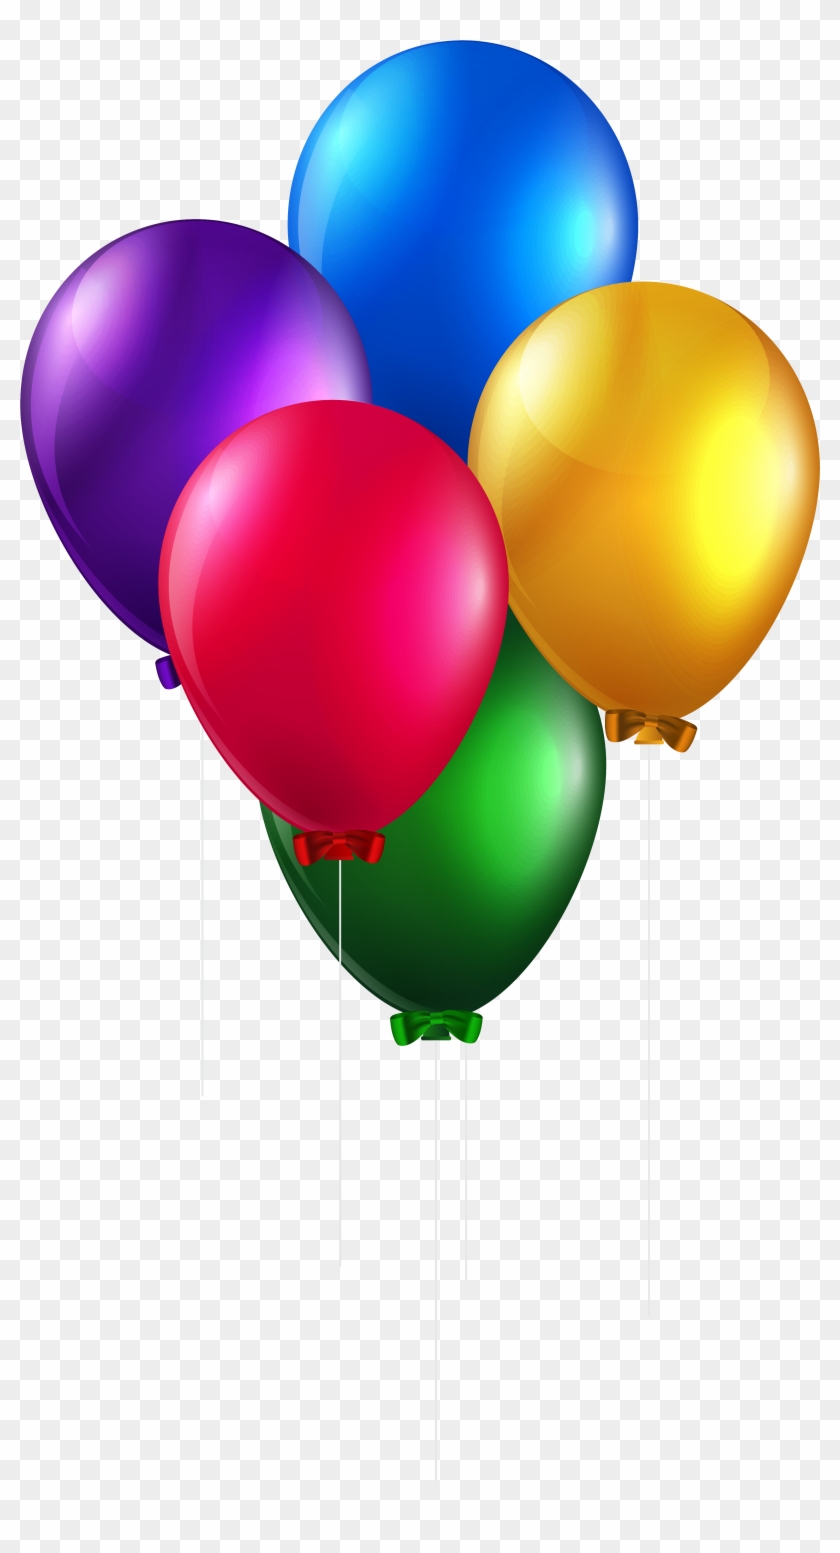 Balloon Clipart Colorful Balloon - Birthday Balloons Transparent Background #410709